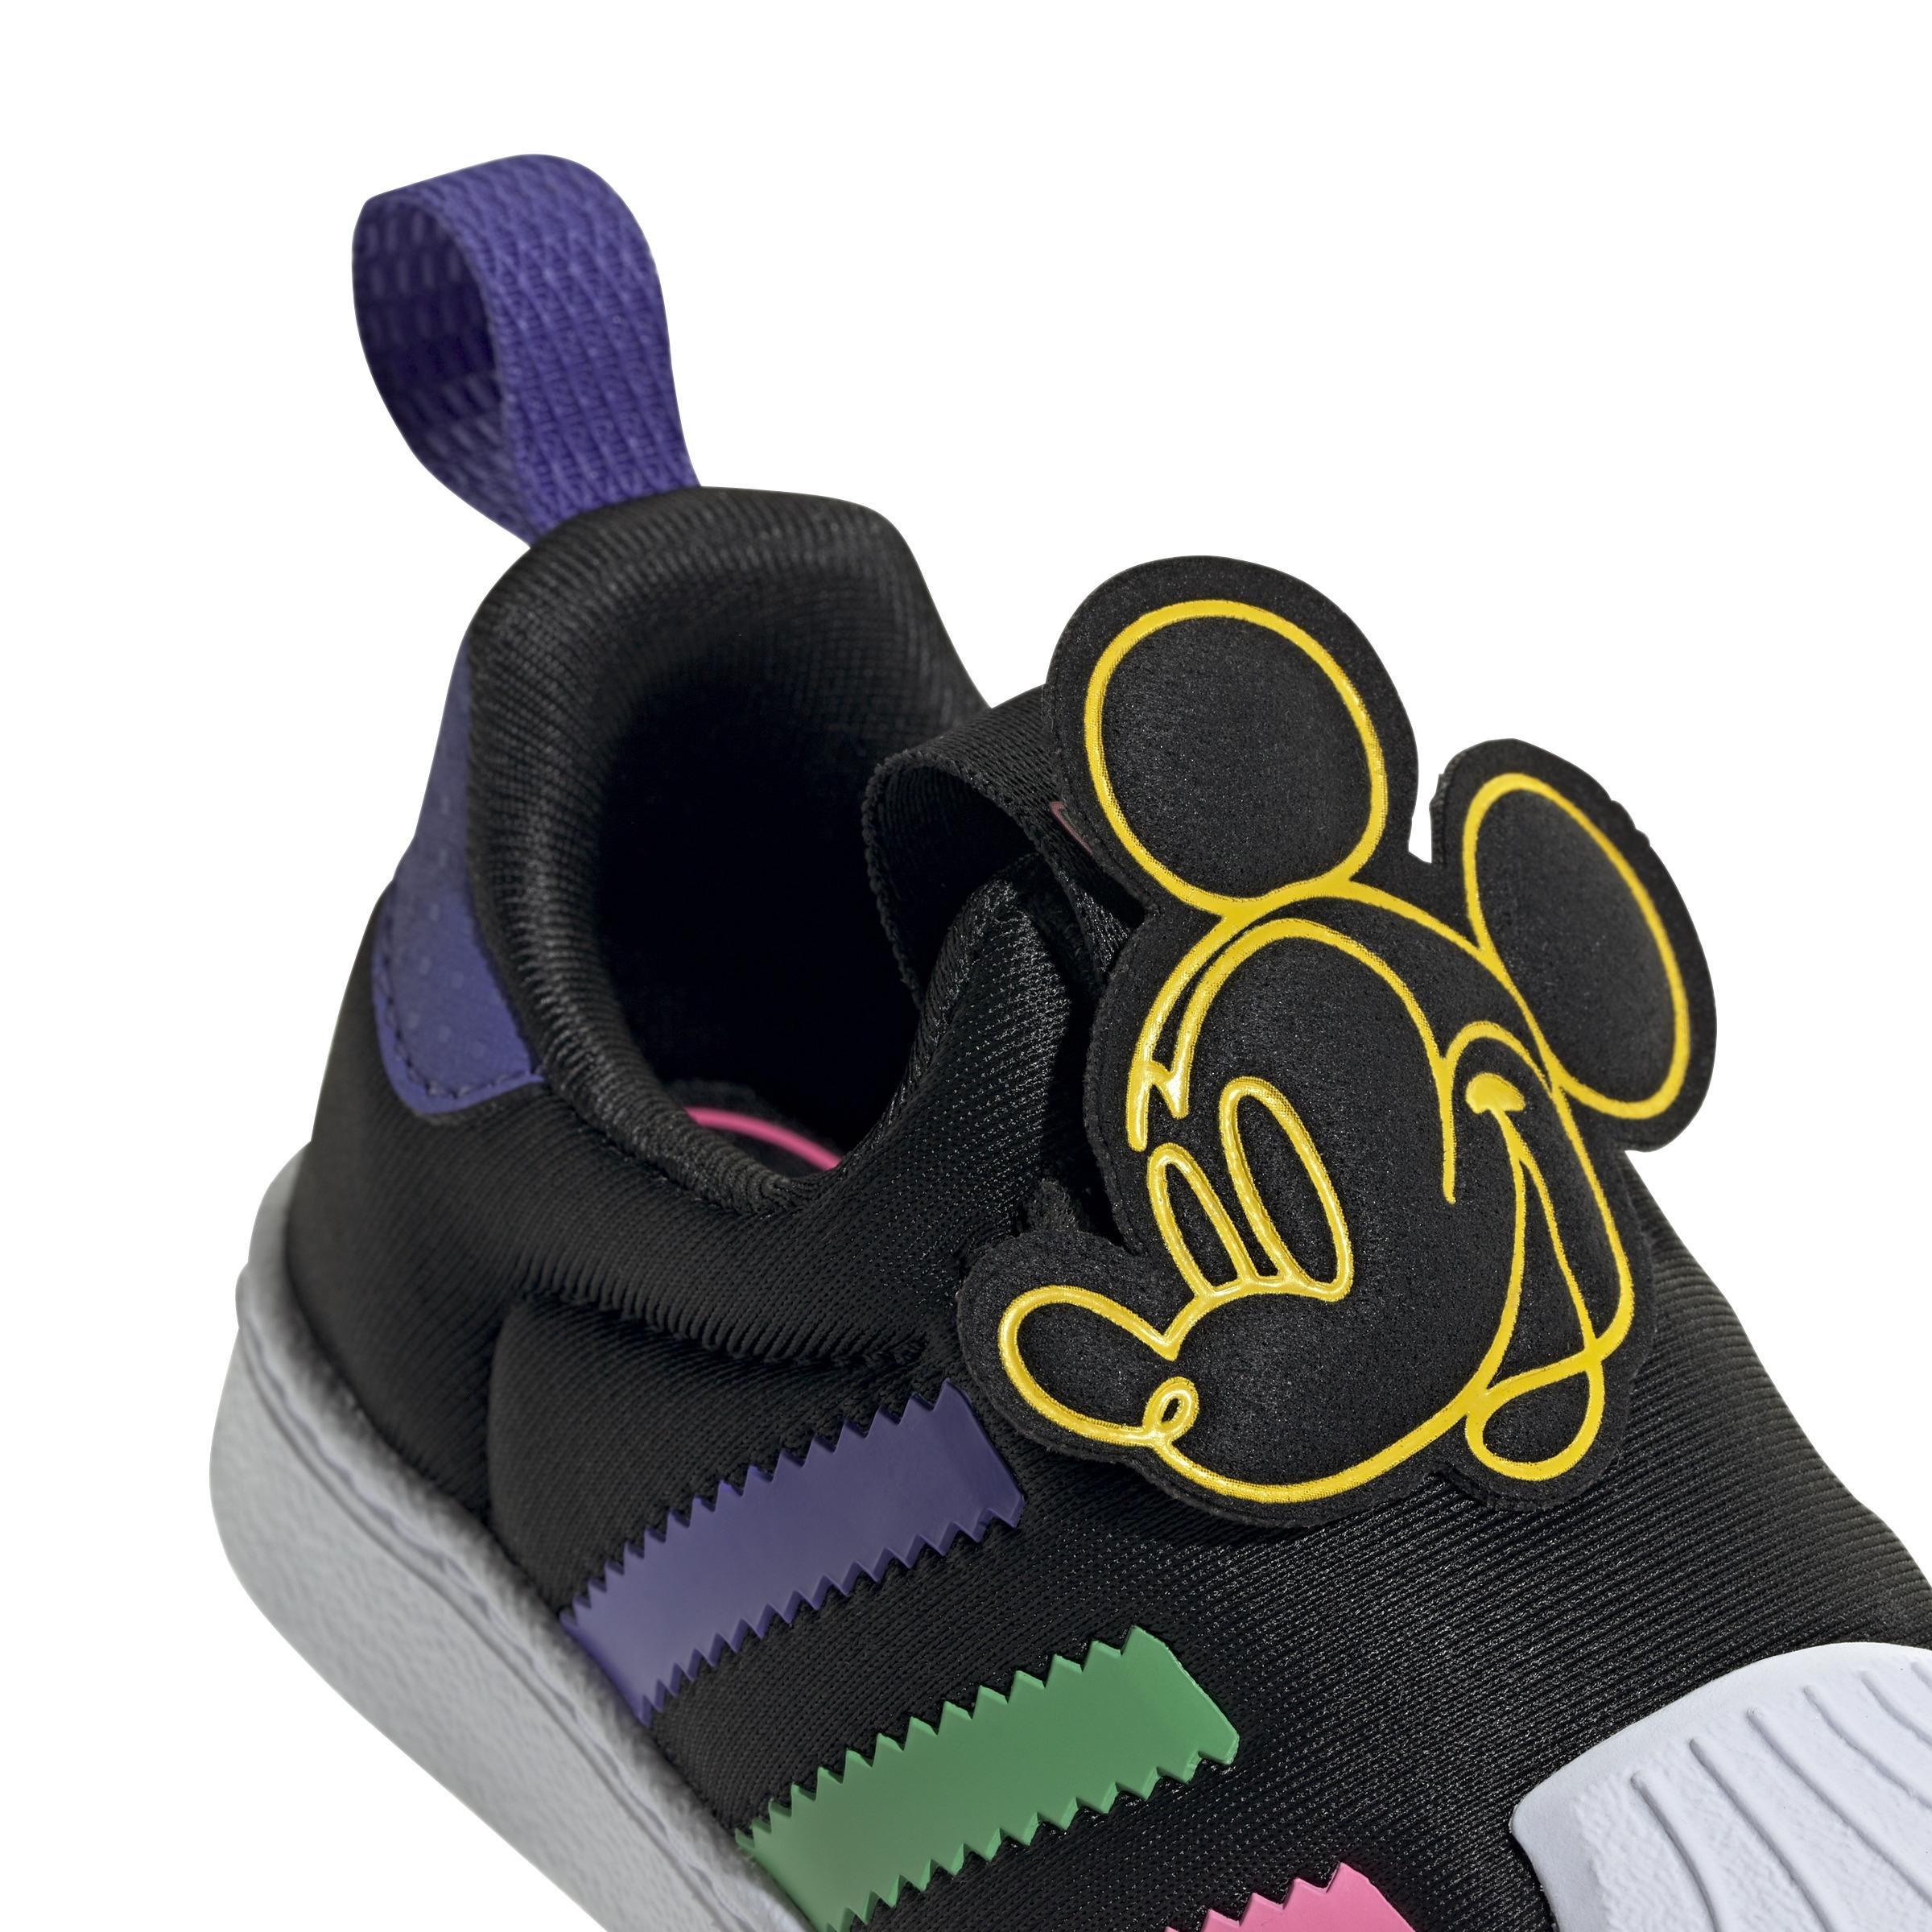 adidas - Kids Unisex Adidas Originals X Disney Mickey Superstar 360 Shoes, Black